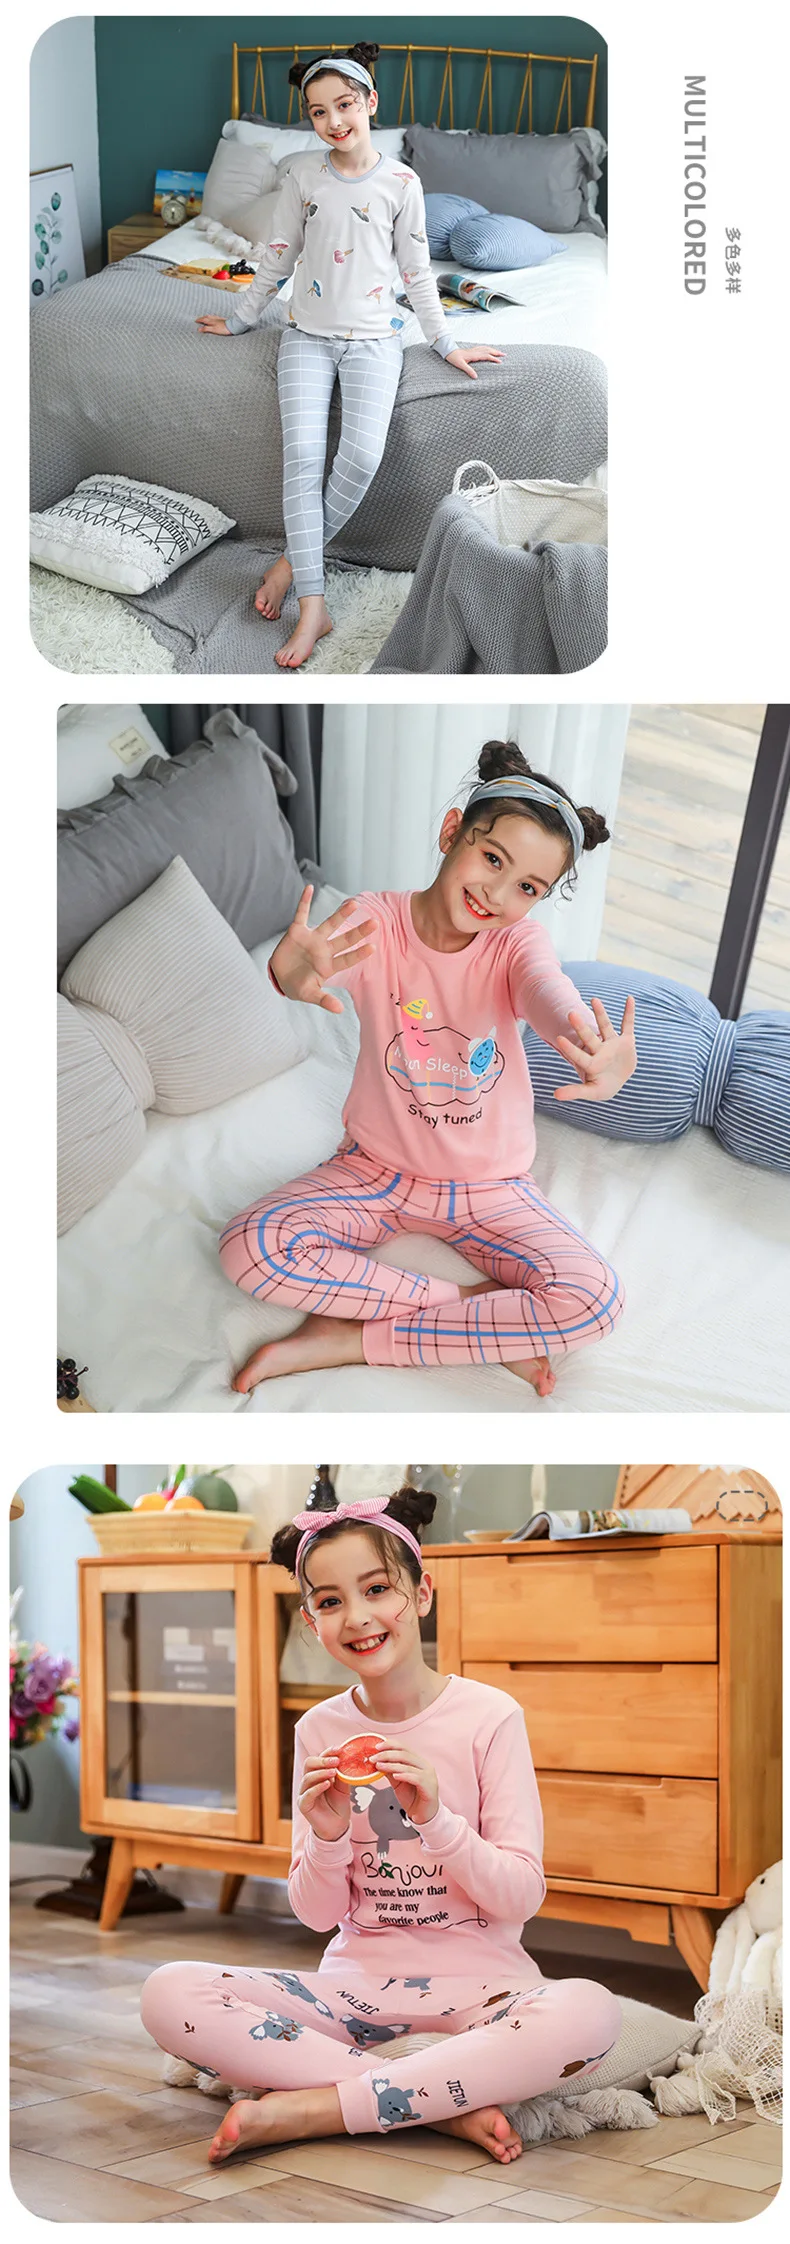 New Teenage Pajamas Cotton Clothes Sets Winter Animal Children's Pyjamas Set for Kids 10 12 14 16 18 Years Boys Girls Sleepwear pajama sets button up	